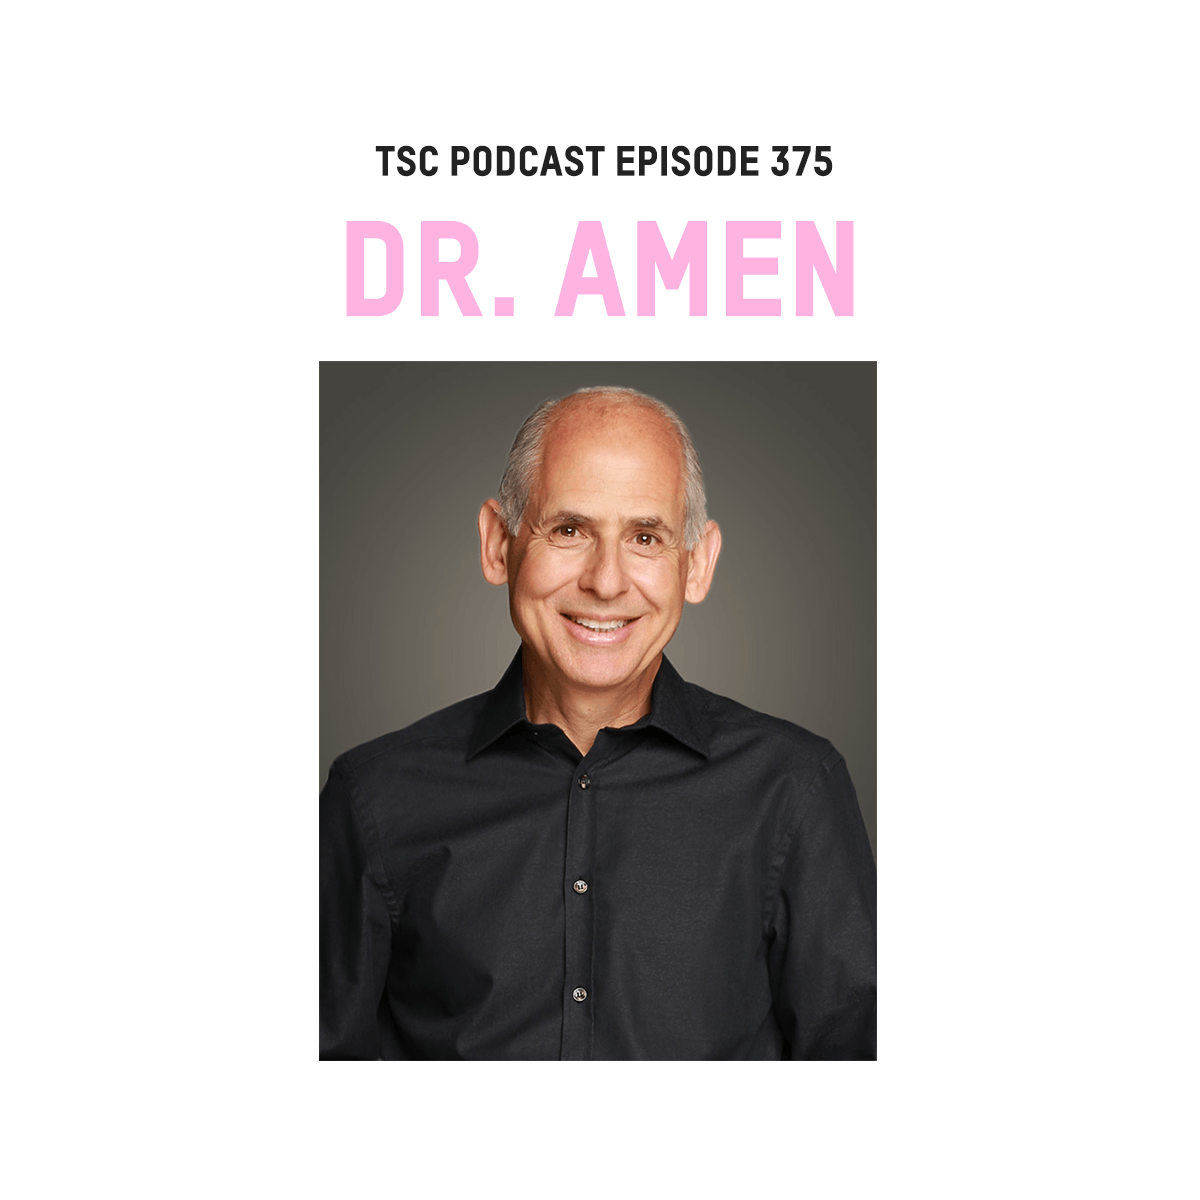 https://tscpodcast.com/wp-content/uploads/2022/08/Dr.Amen-Blog-Post.png